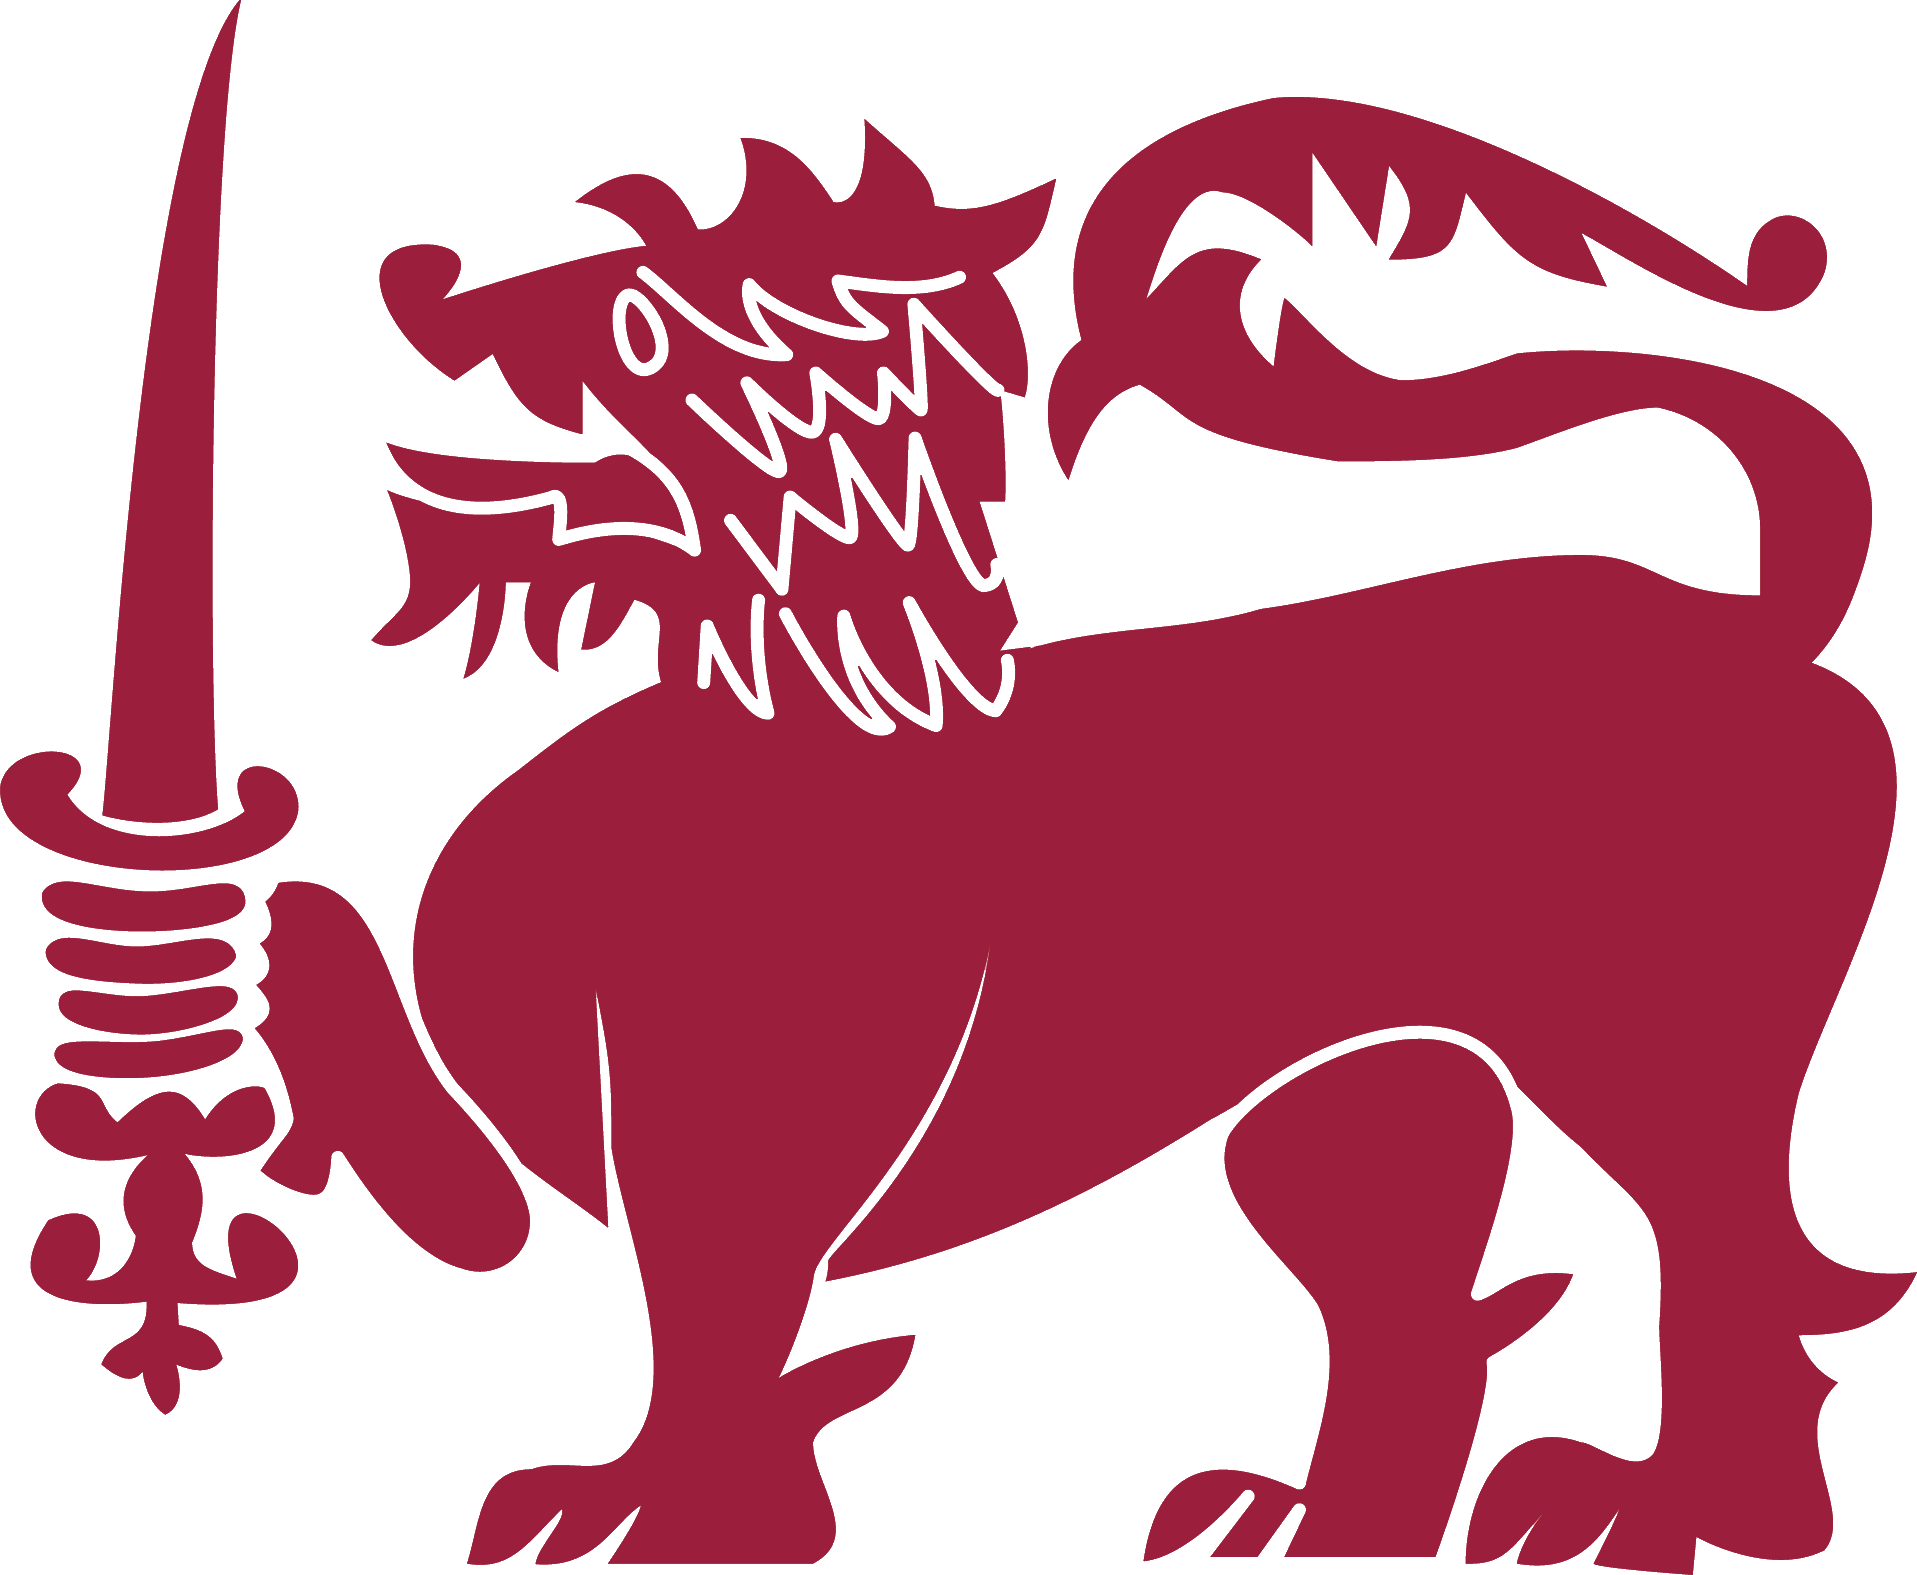 My logo, the 'lion' on the Sri Lankan flag.